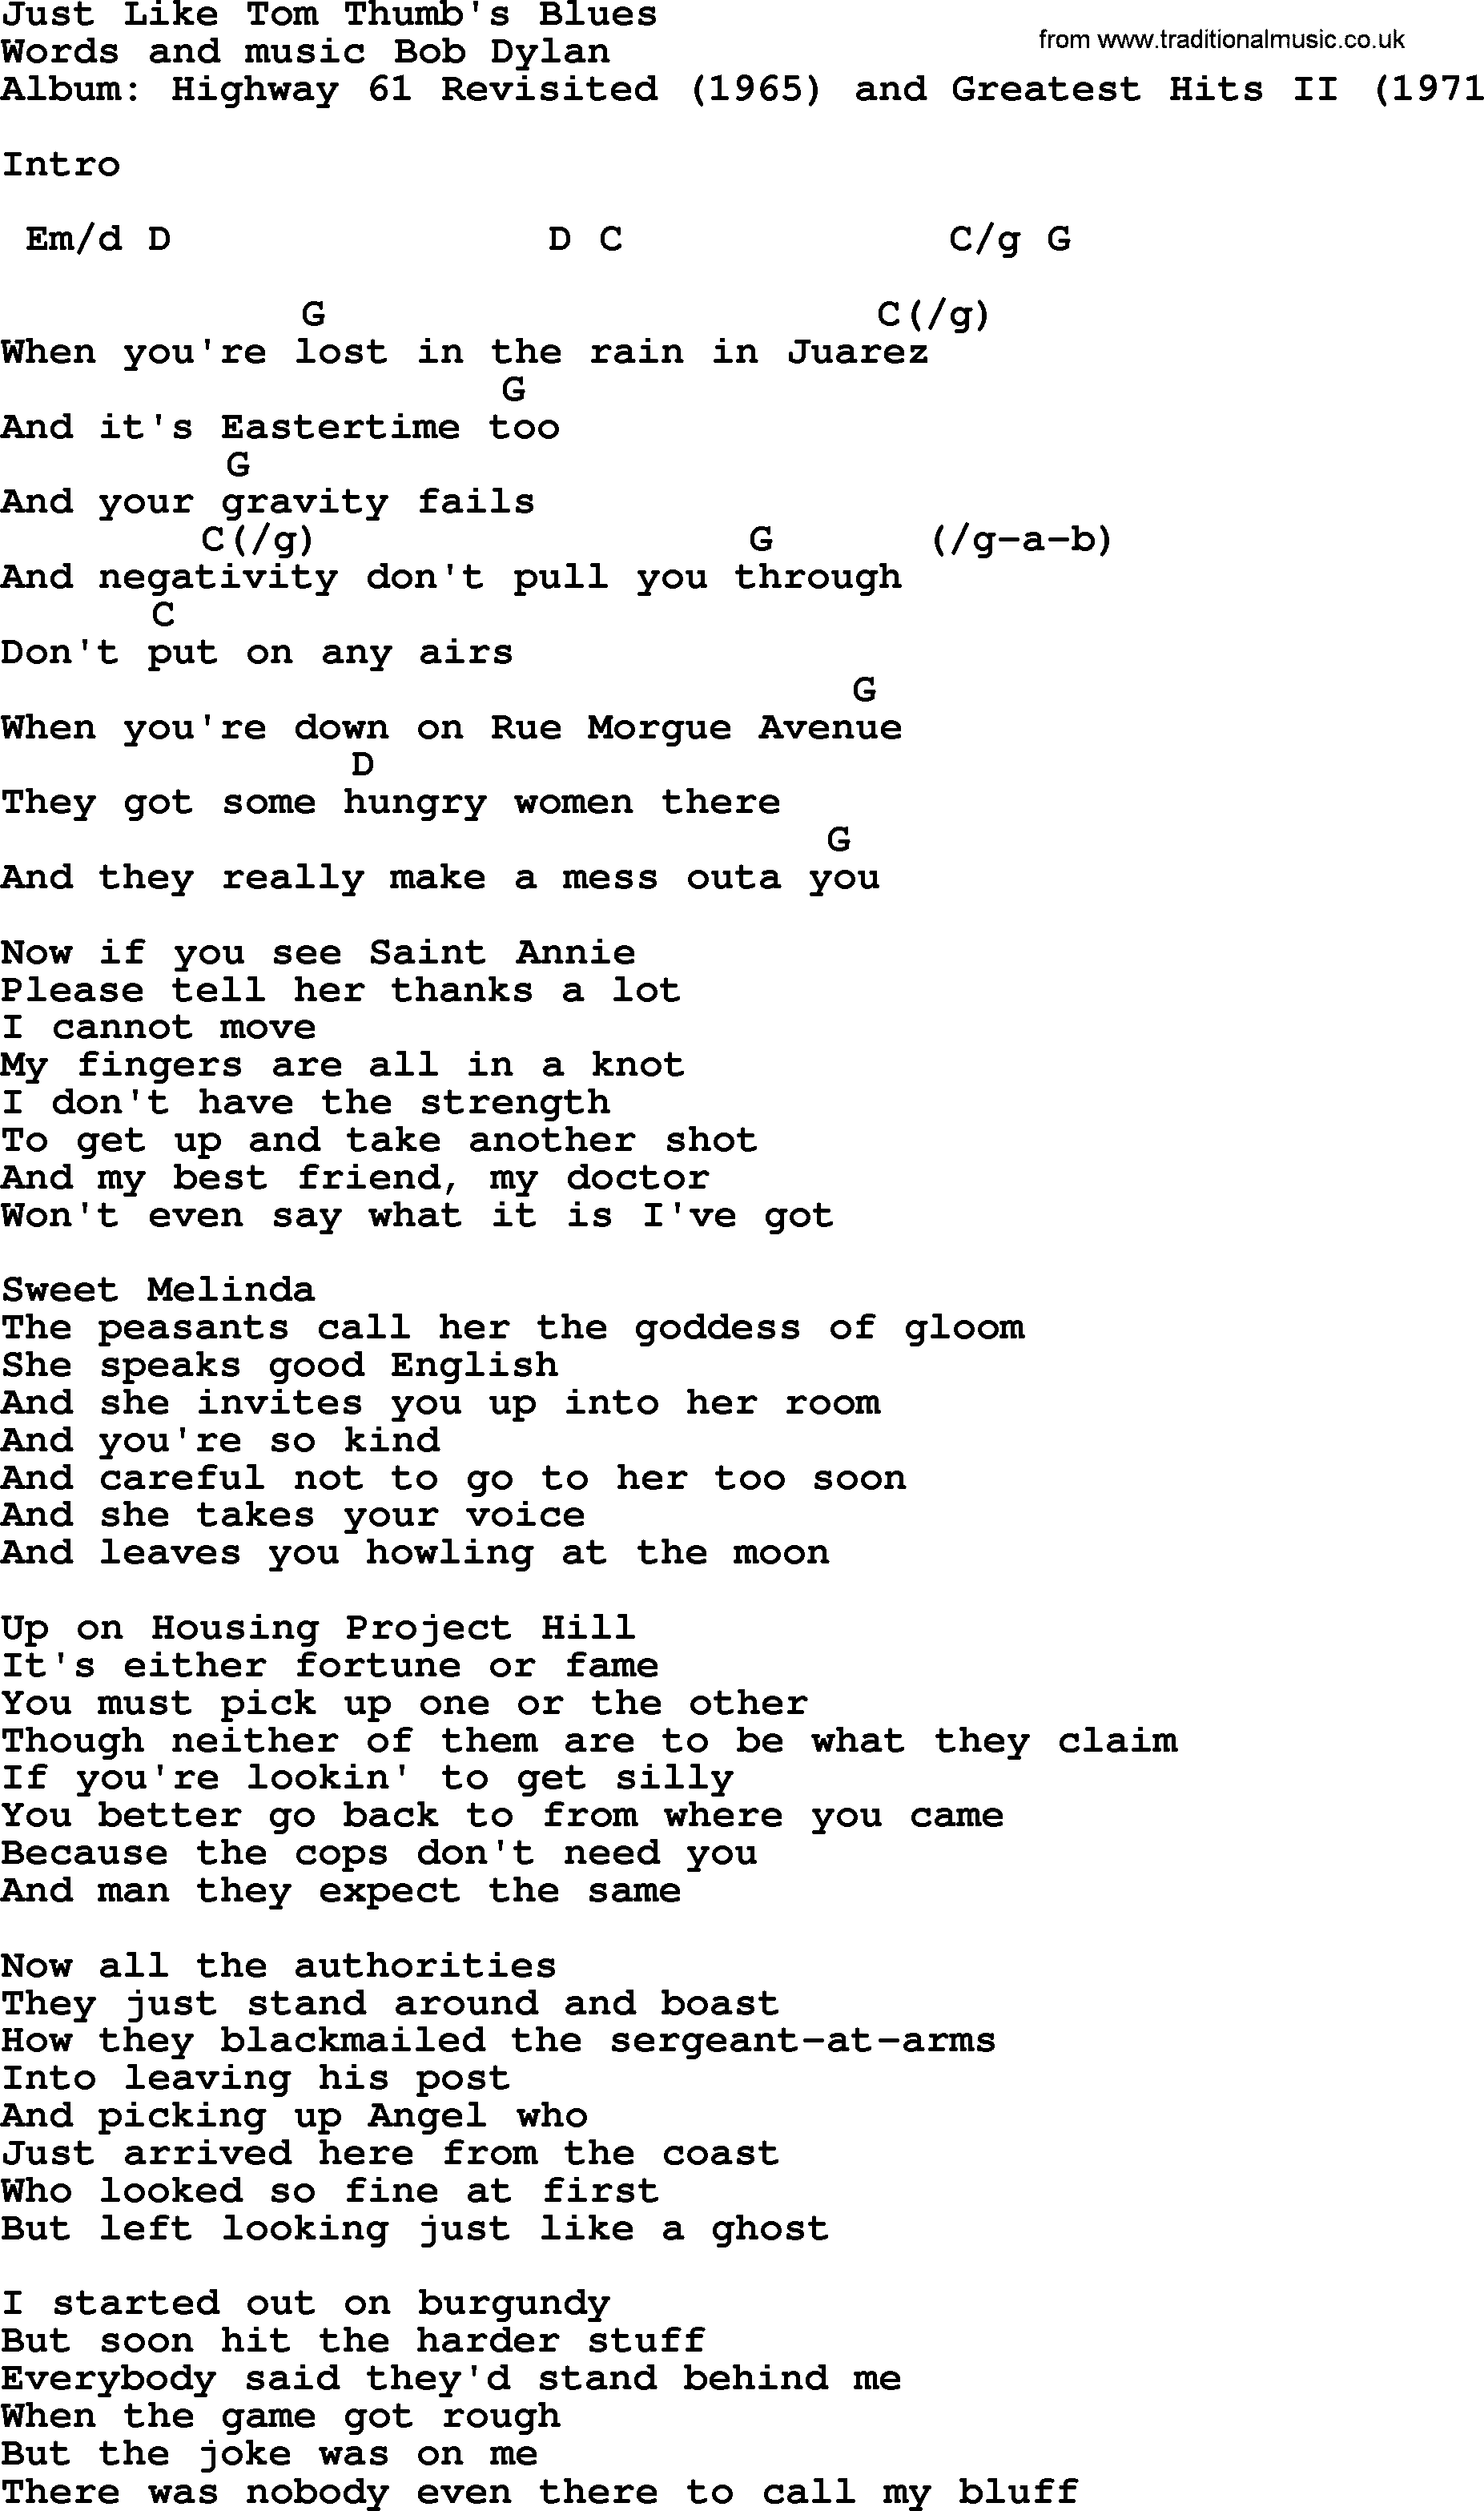 Bob Dylan song, lyrics with chords - Just Like Tom Thumb's Blues